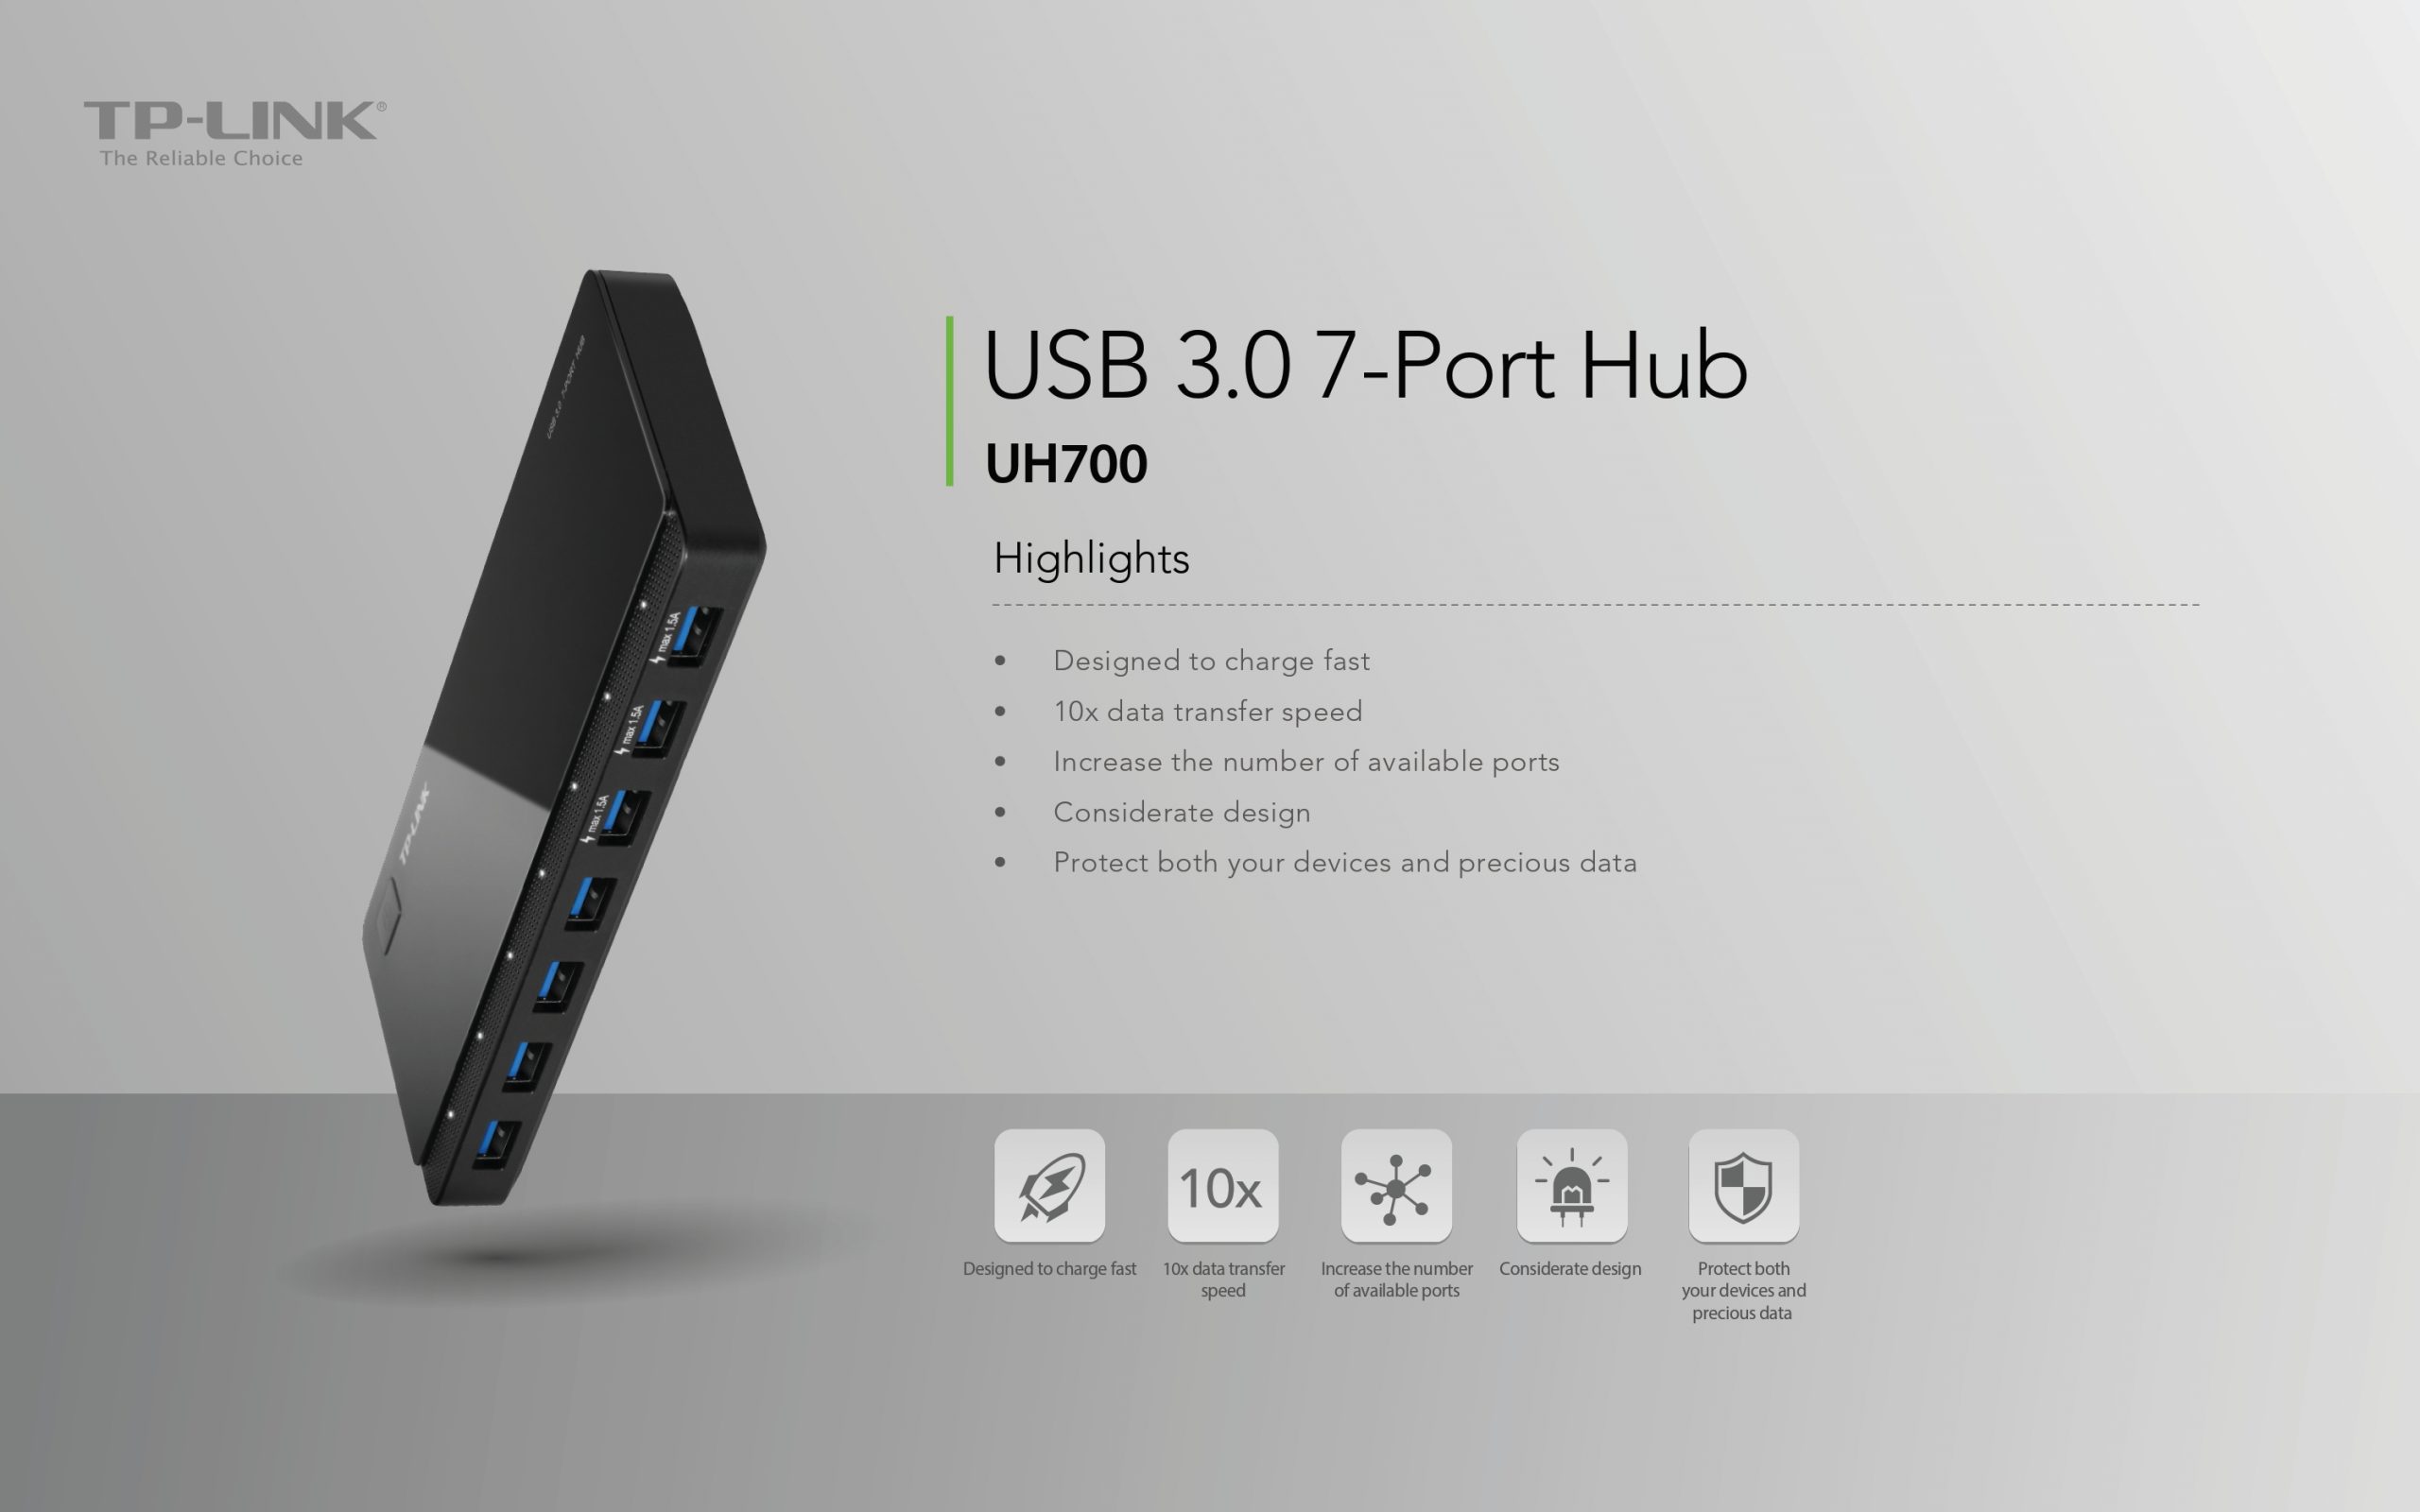 UH700, USB 3.0 7-Port Hub